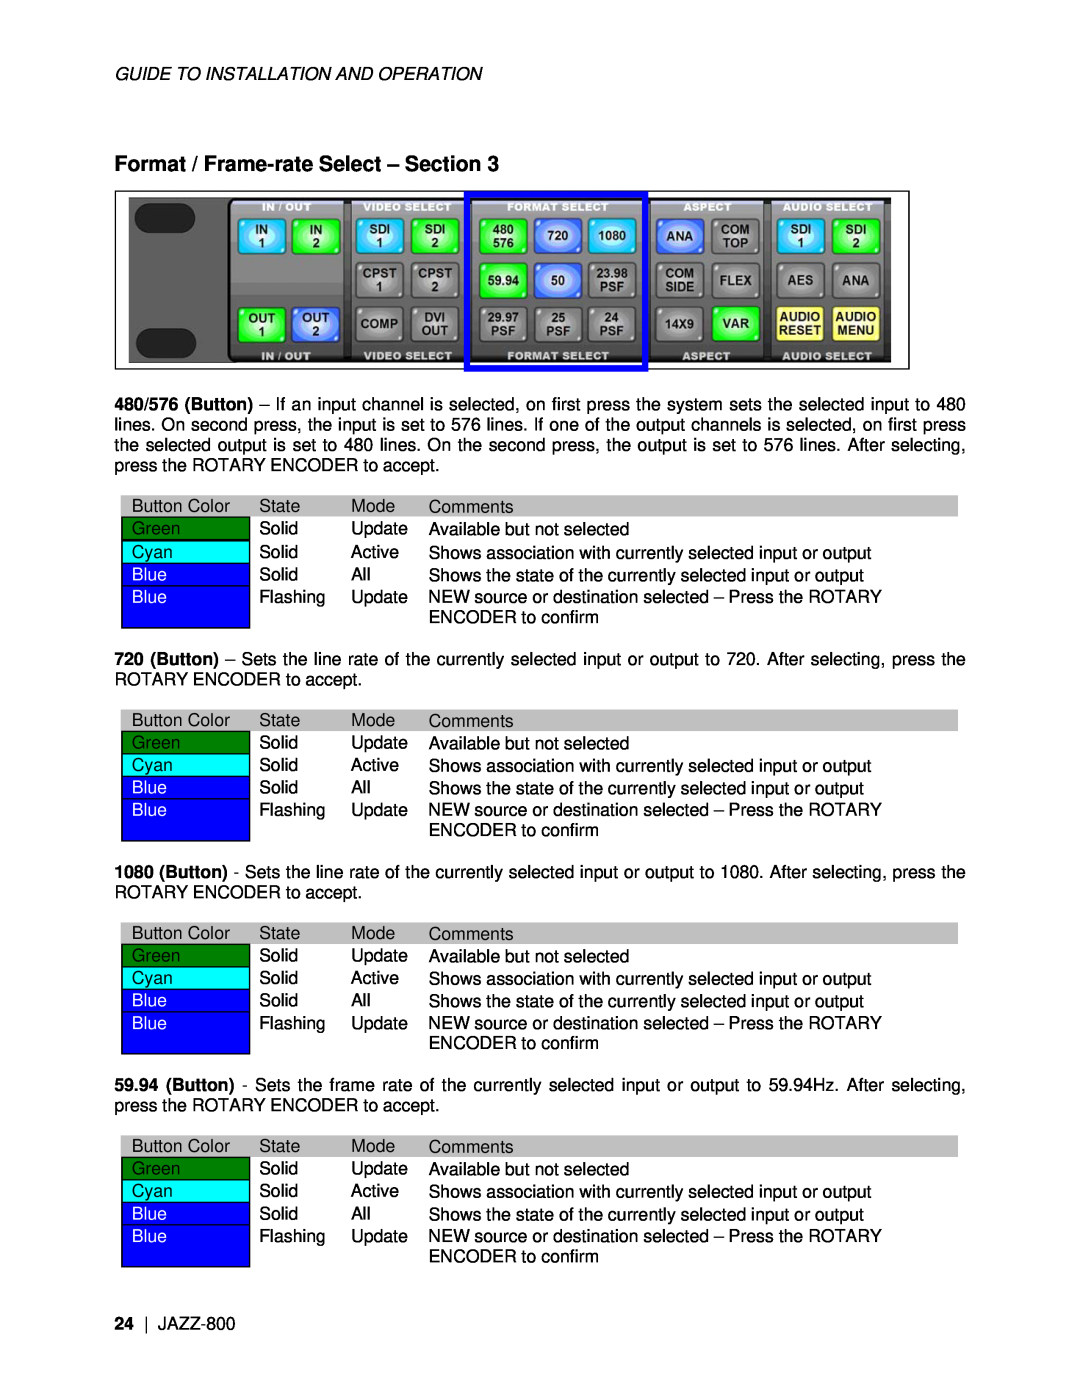 Miranda Camera Co JAZZ-800 manual Format / Frame-rateSelect - Section, Blue Blue 